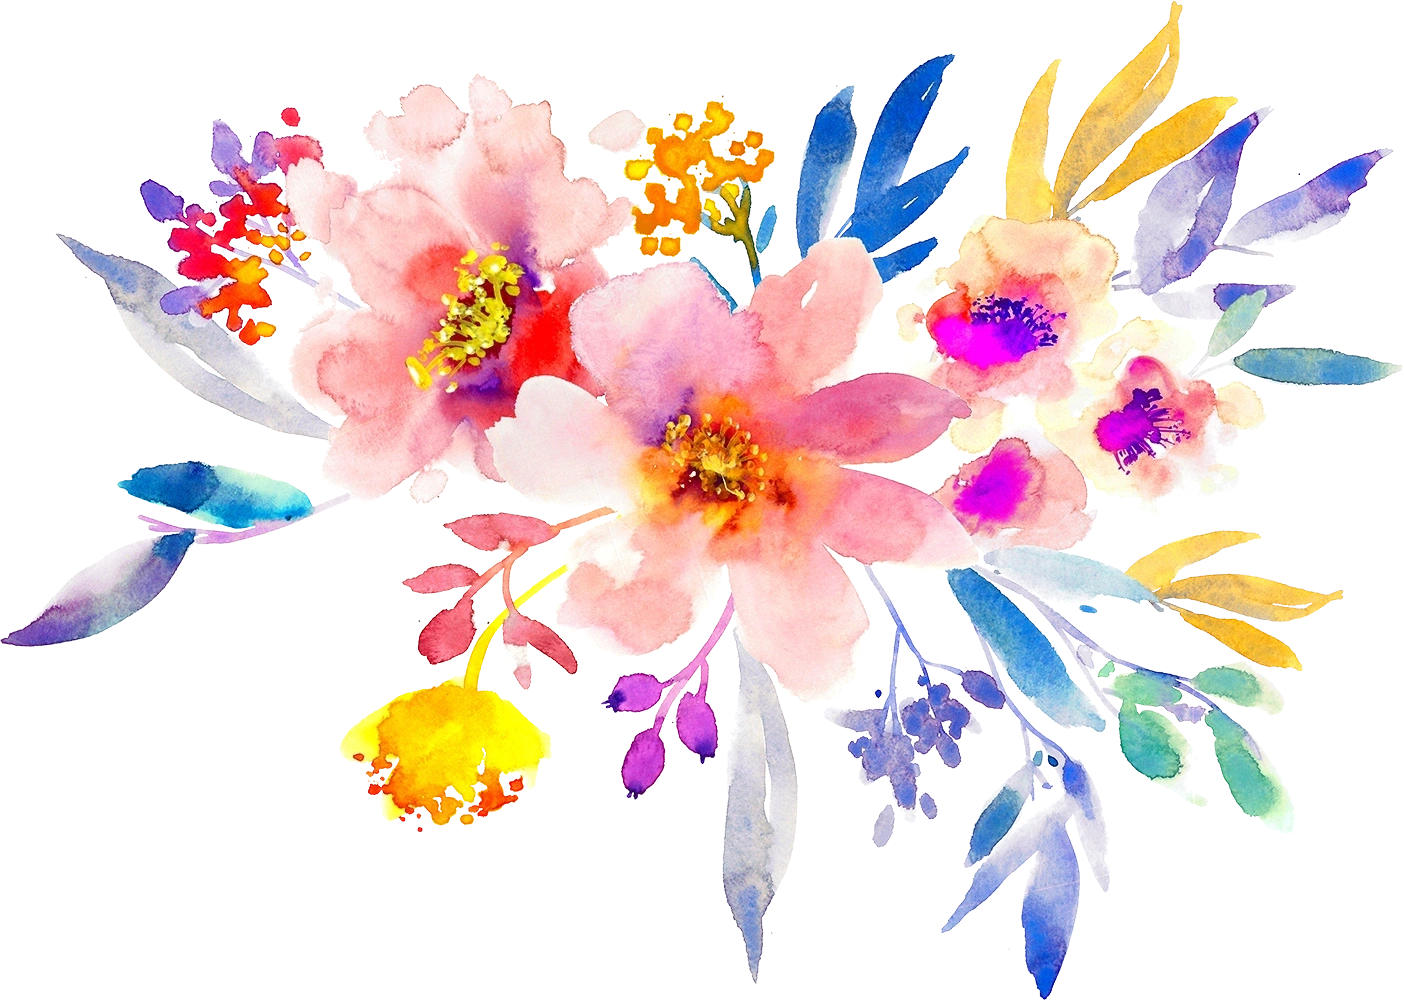 Perfect Watercolor Flowers (Digital Download)